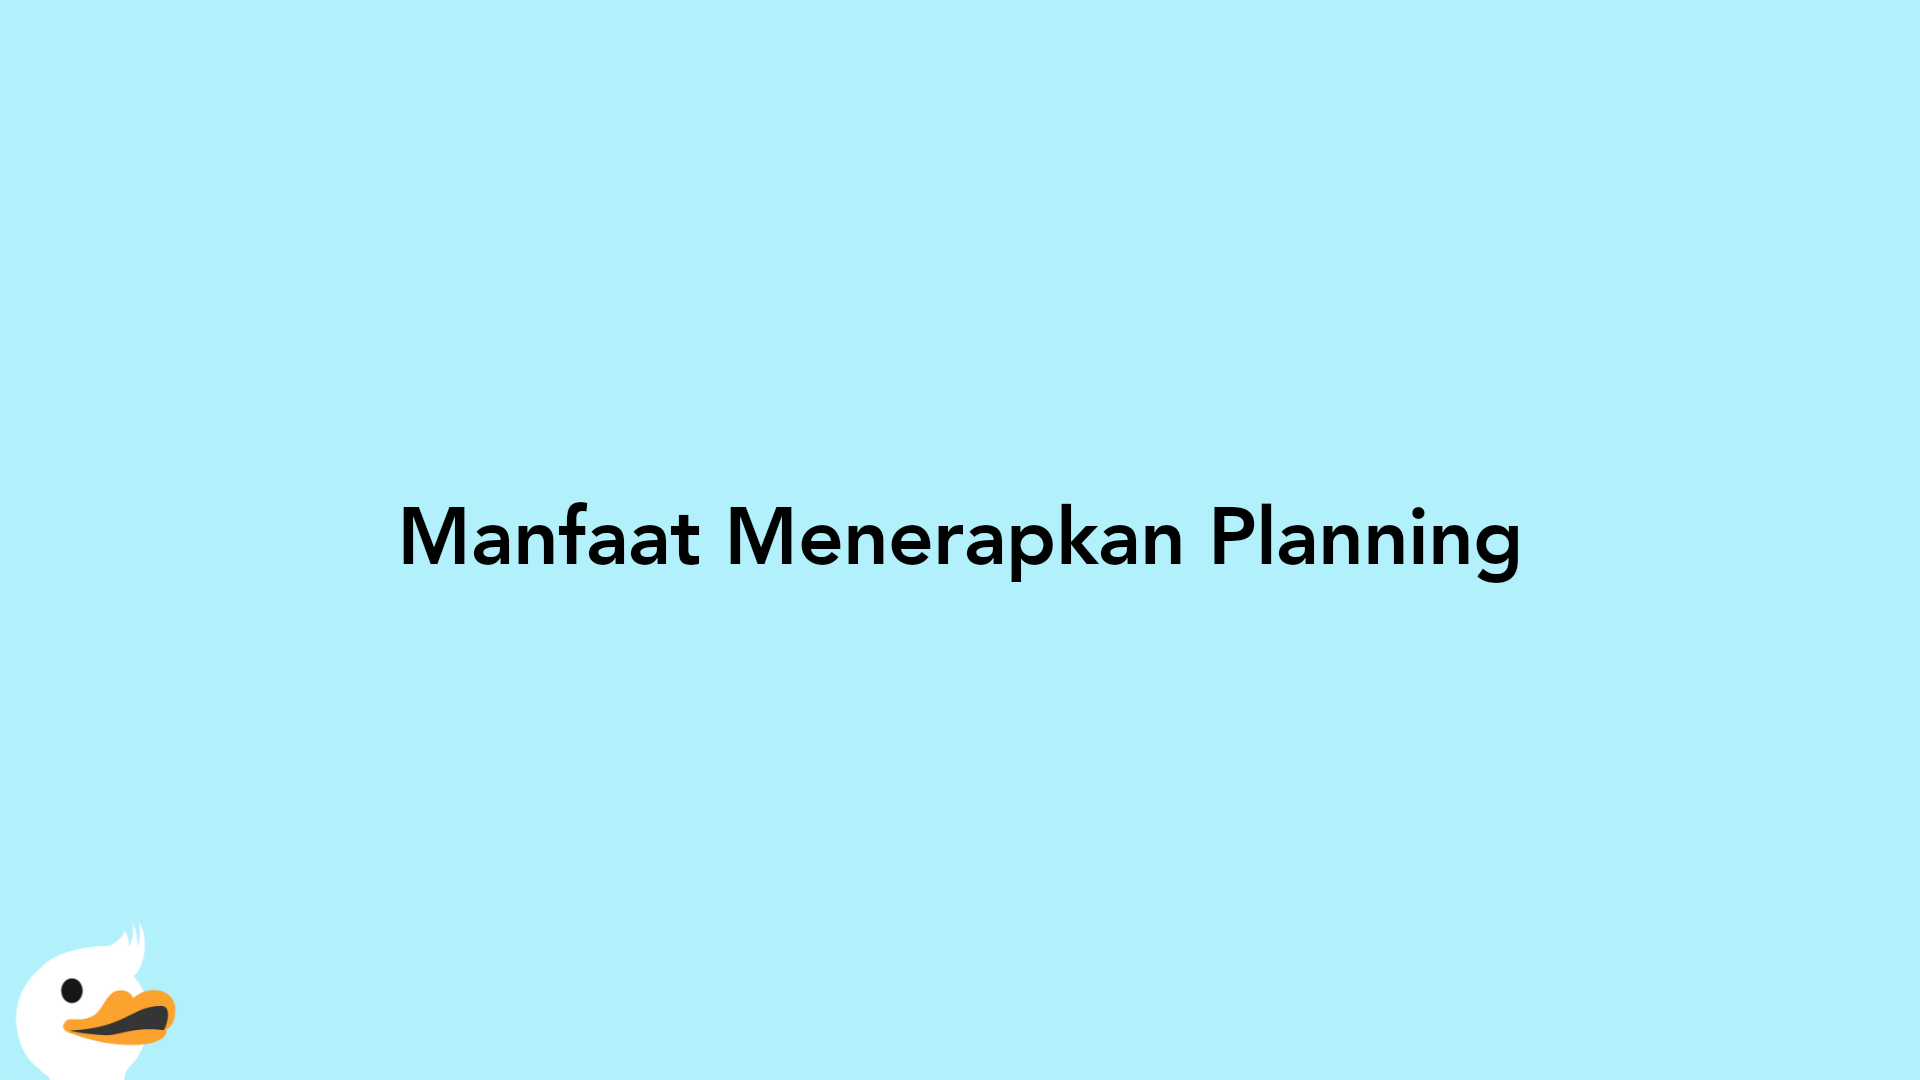 Manfaat Menerapkan Planning